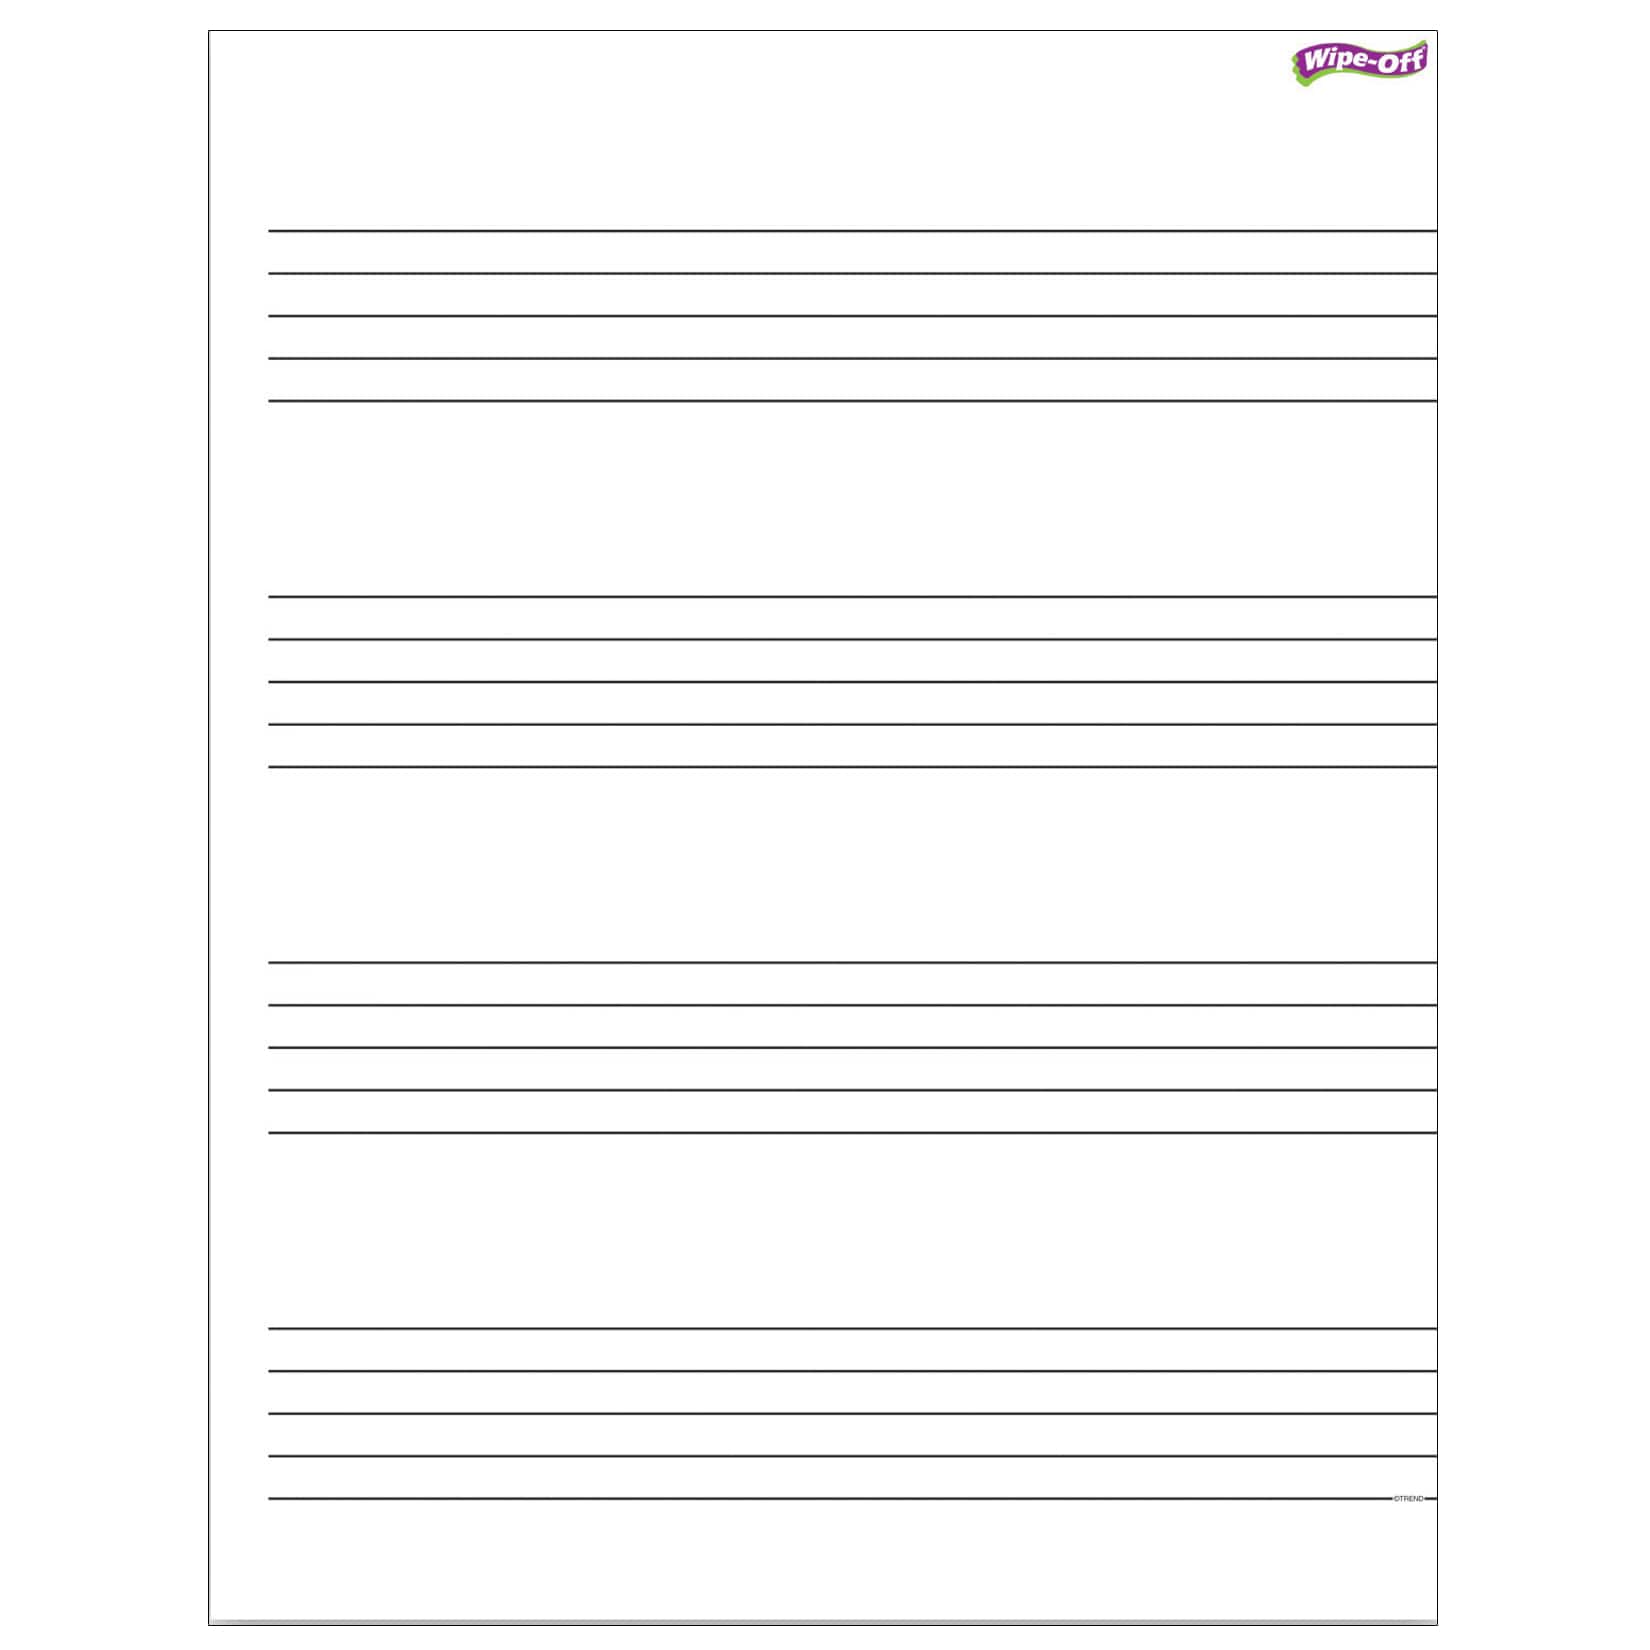 I Love Music Printable Sheet Music Paper Instant Download Blank Staff Paper  Blank Sheet Music Blank Music Paper Manuscript Paper 